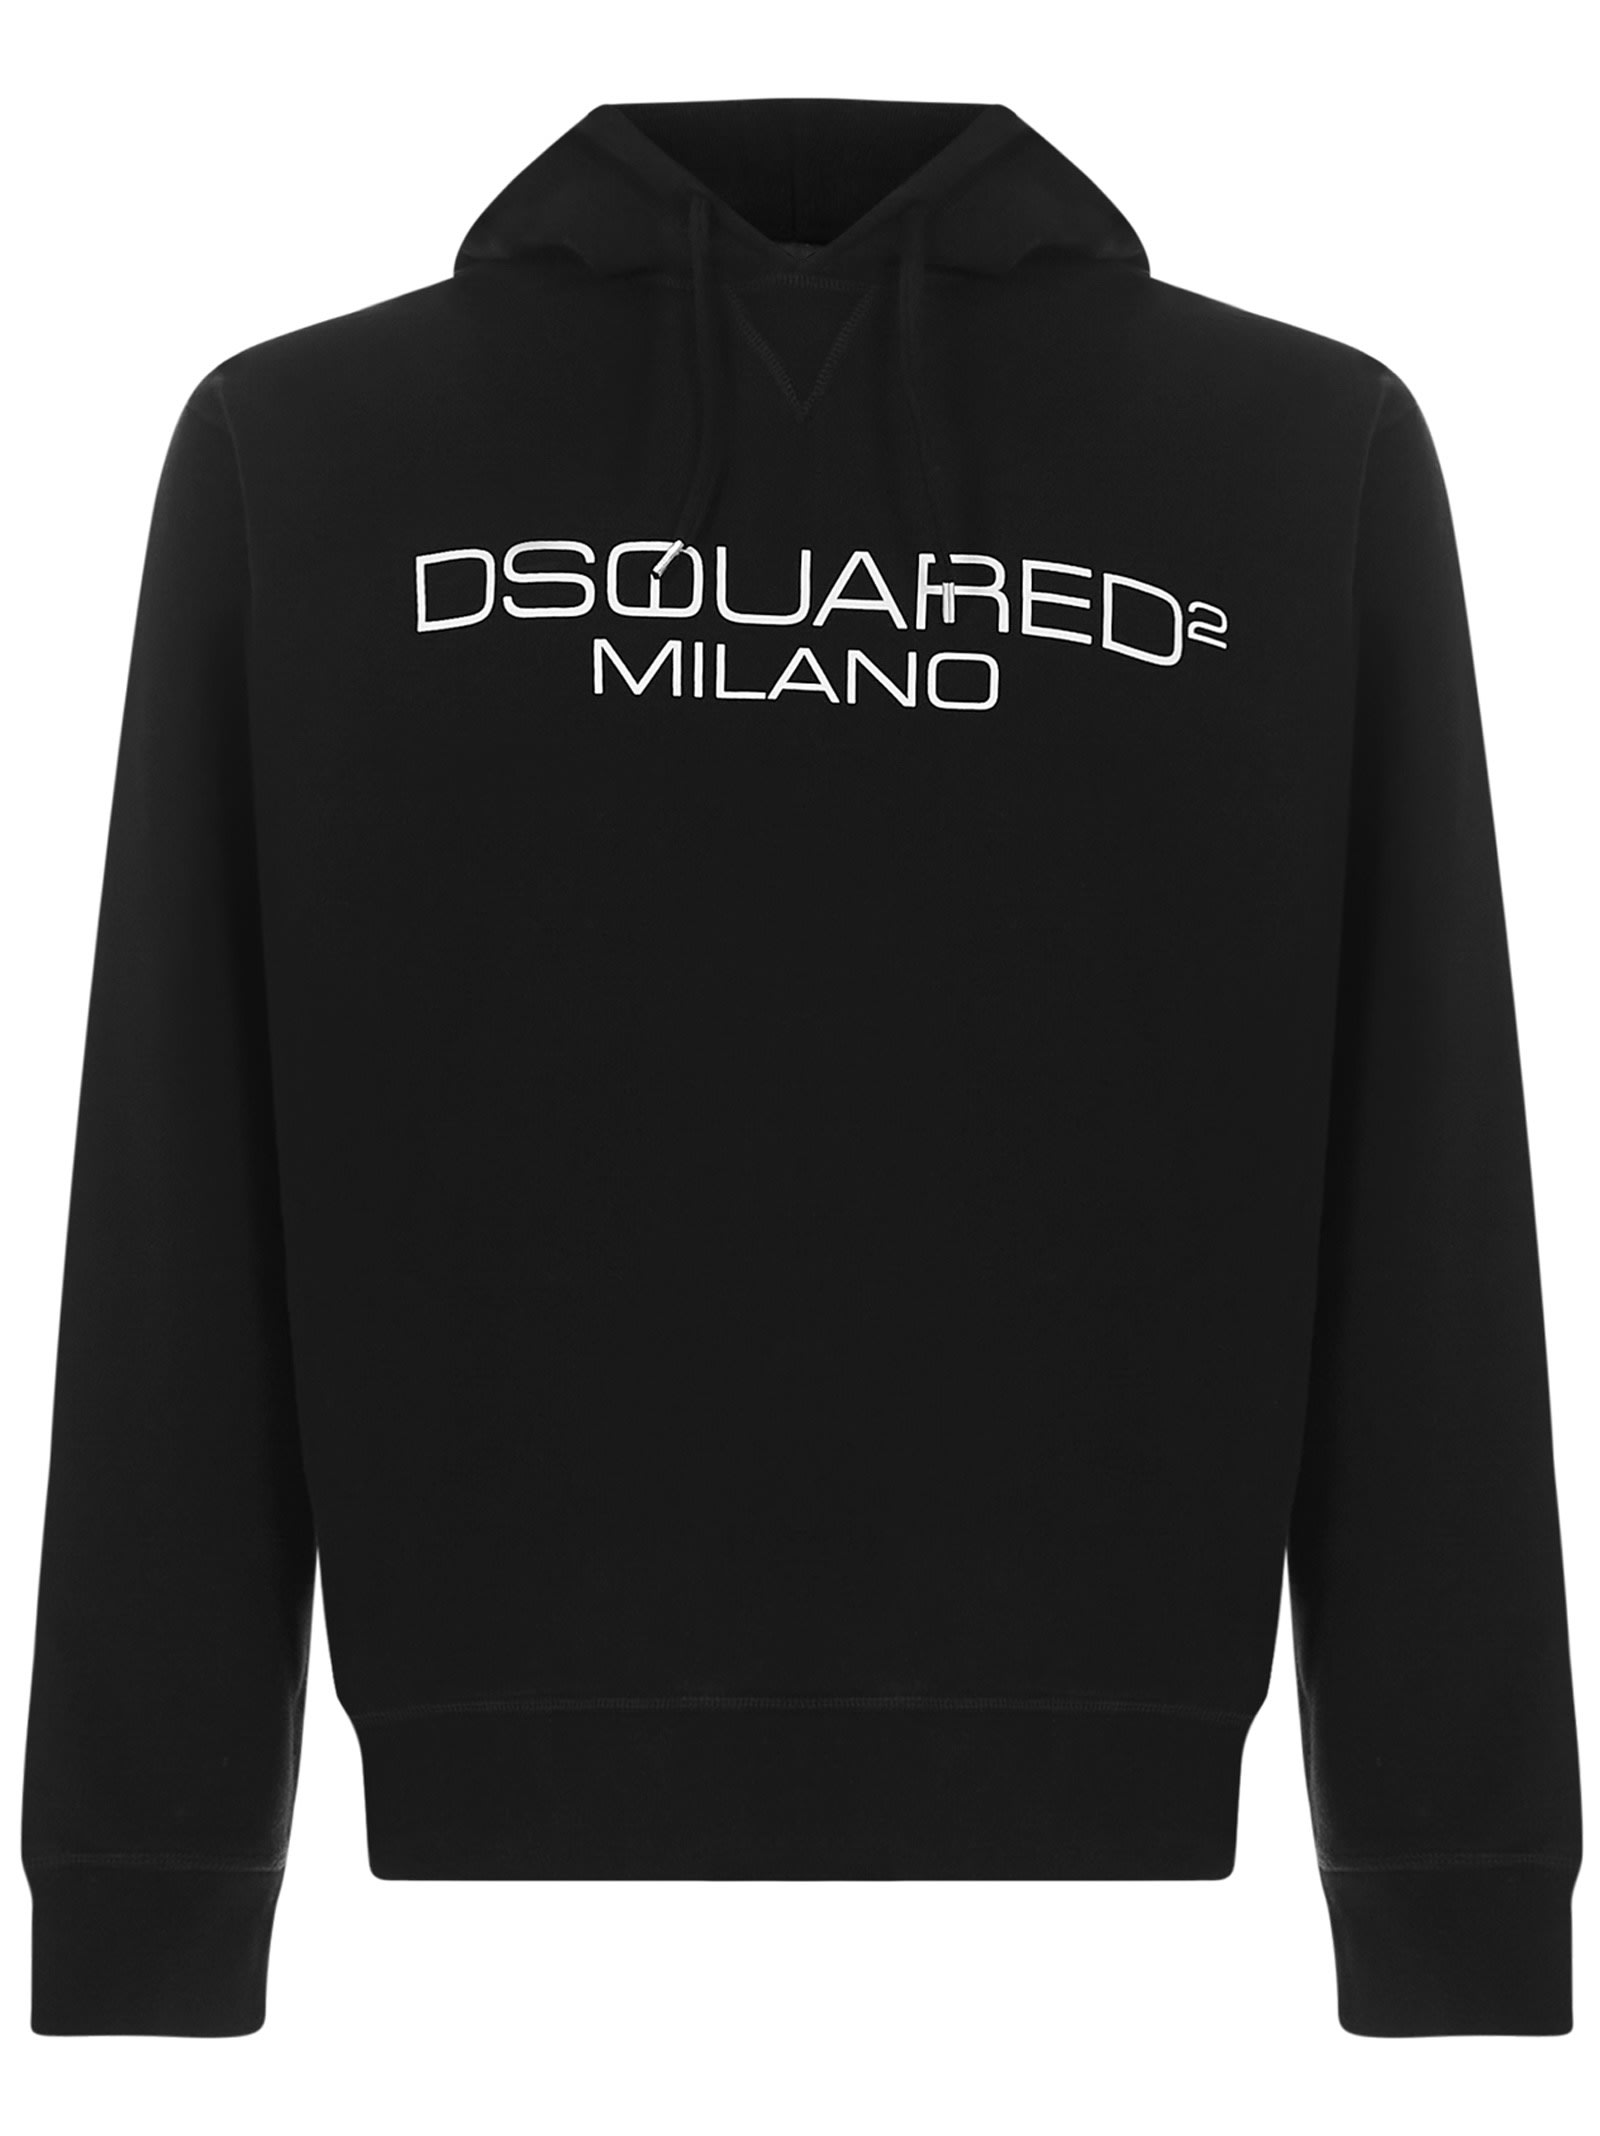 Dsquared2 D2 Milano Sweatshirt